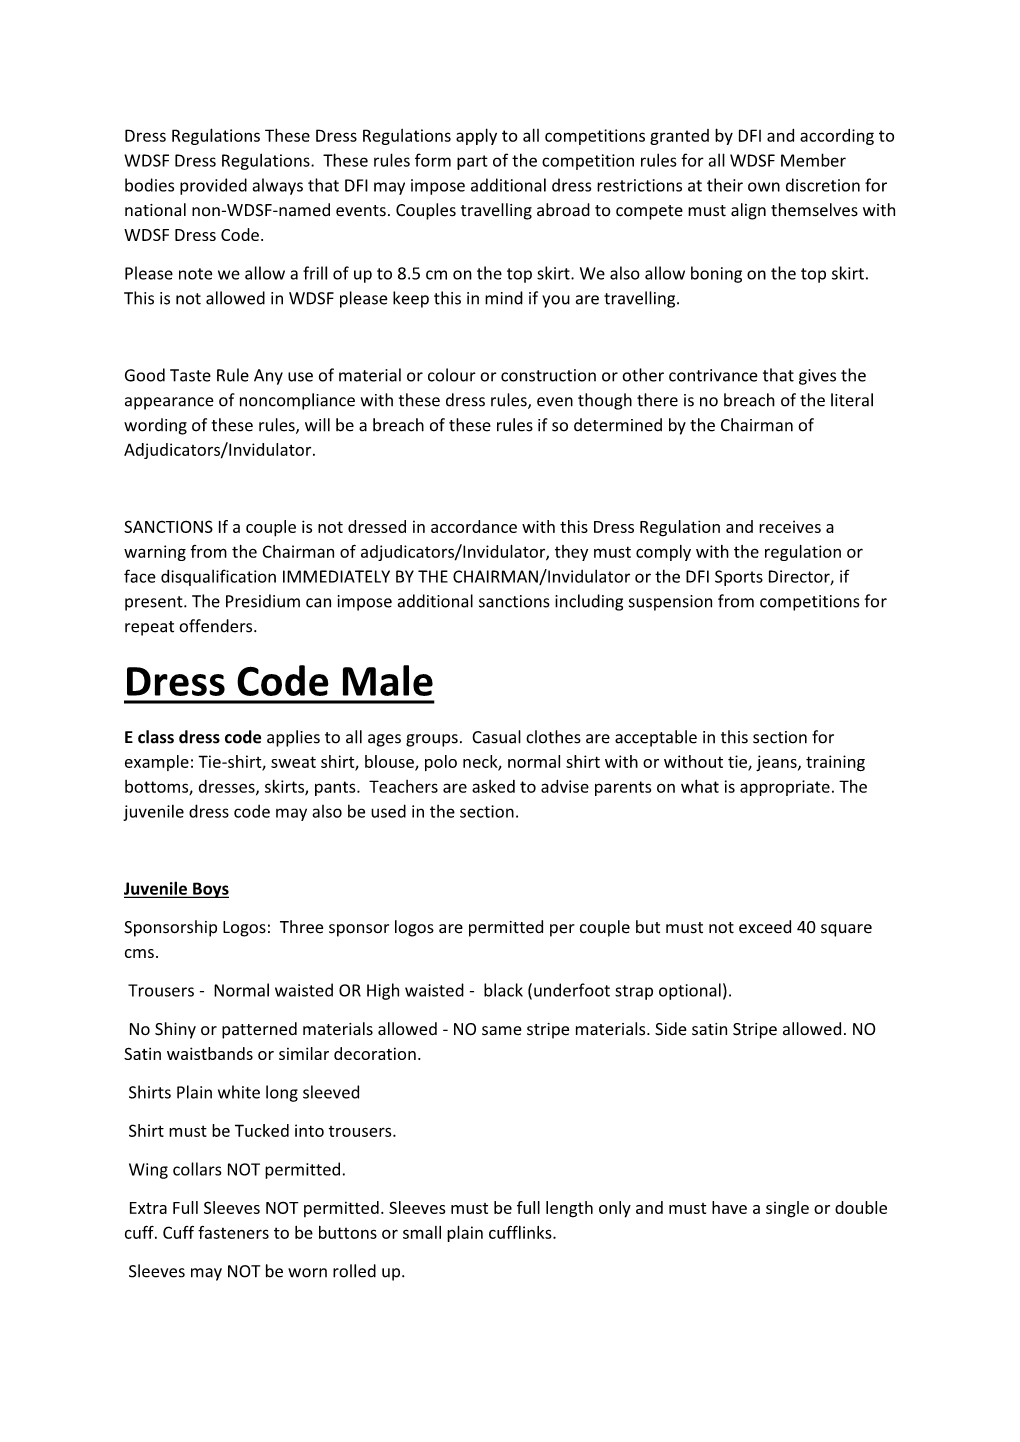 Dress Code Male